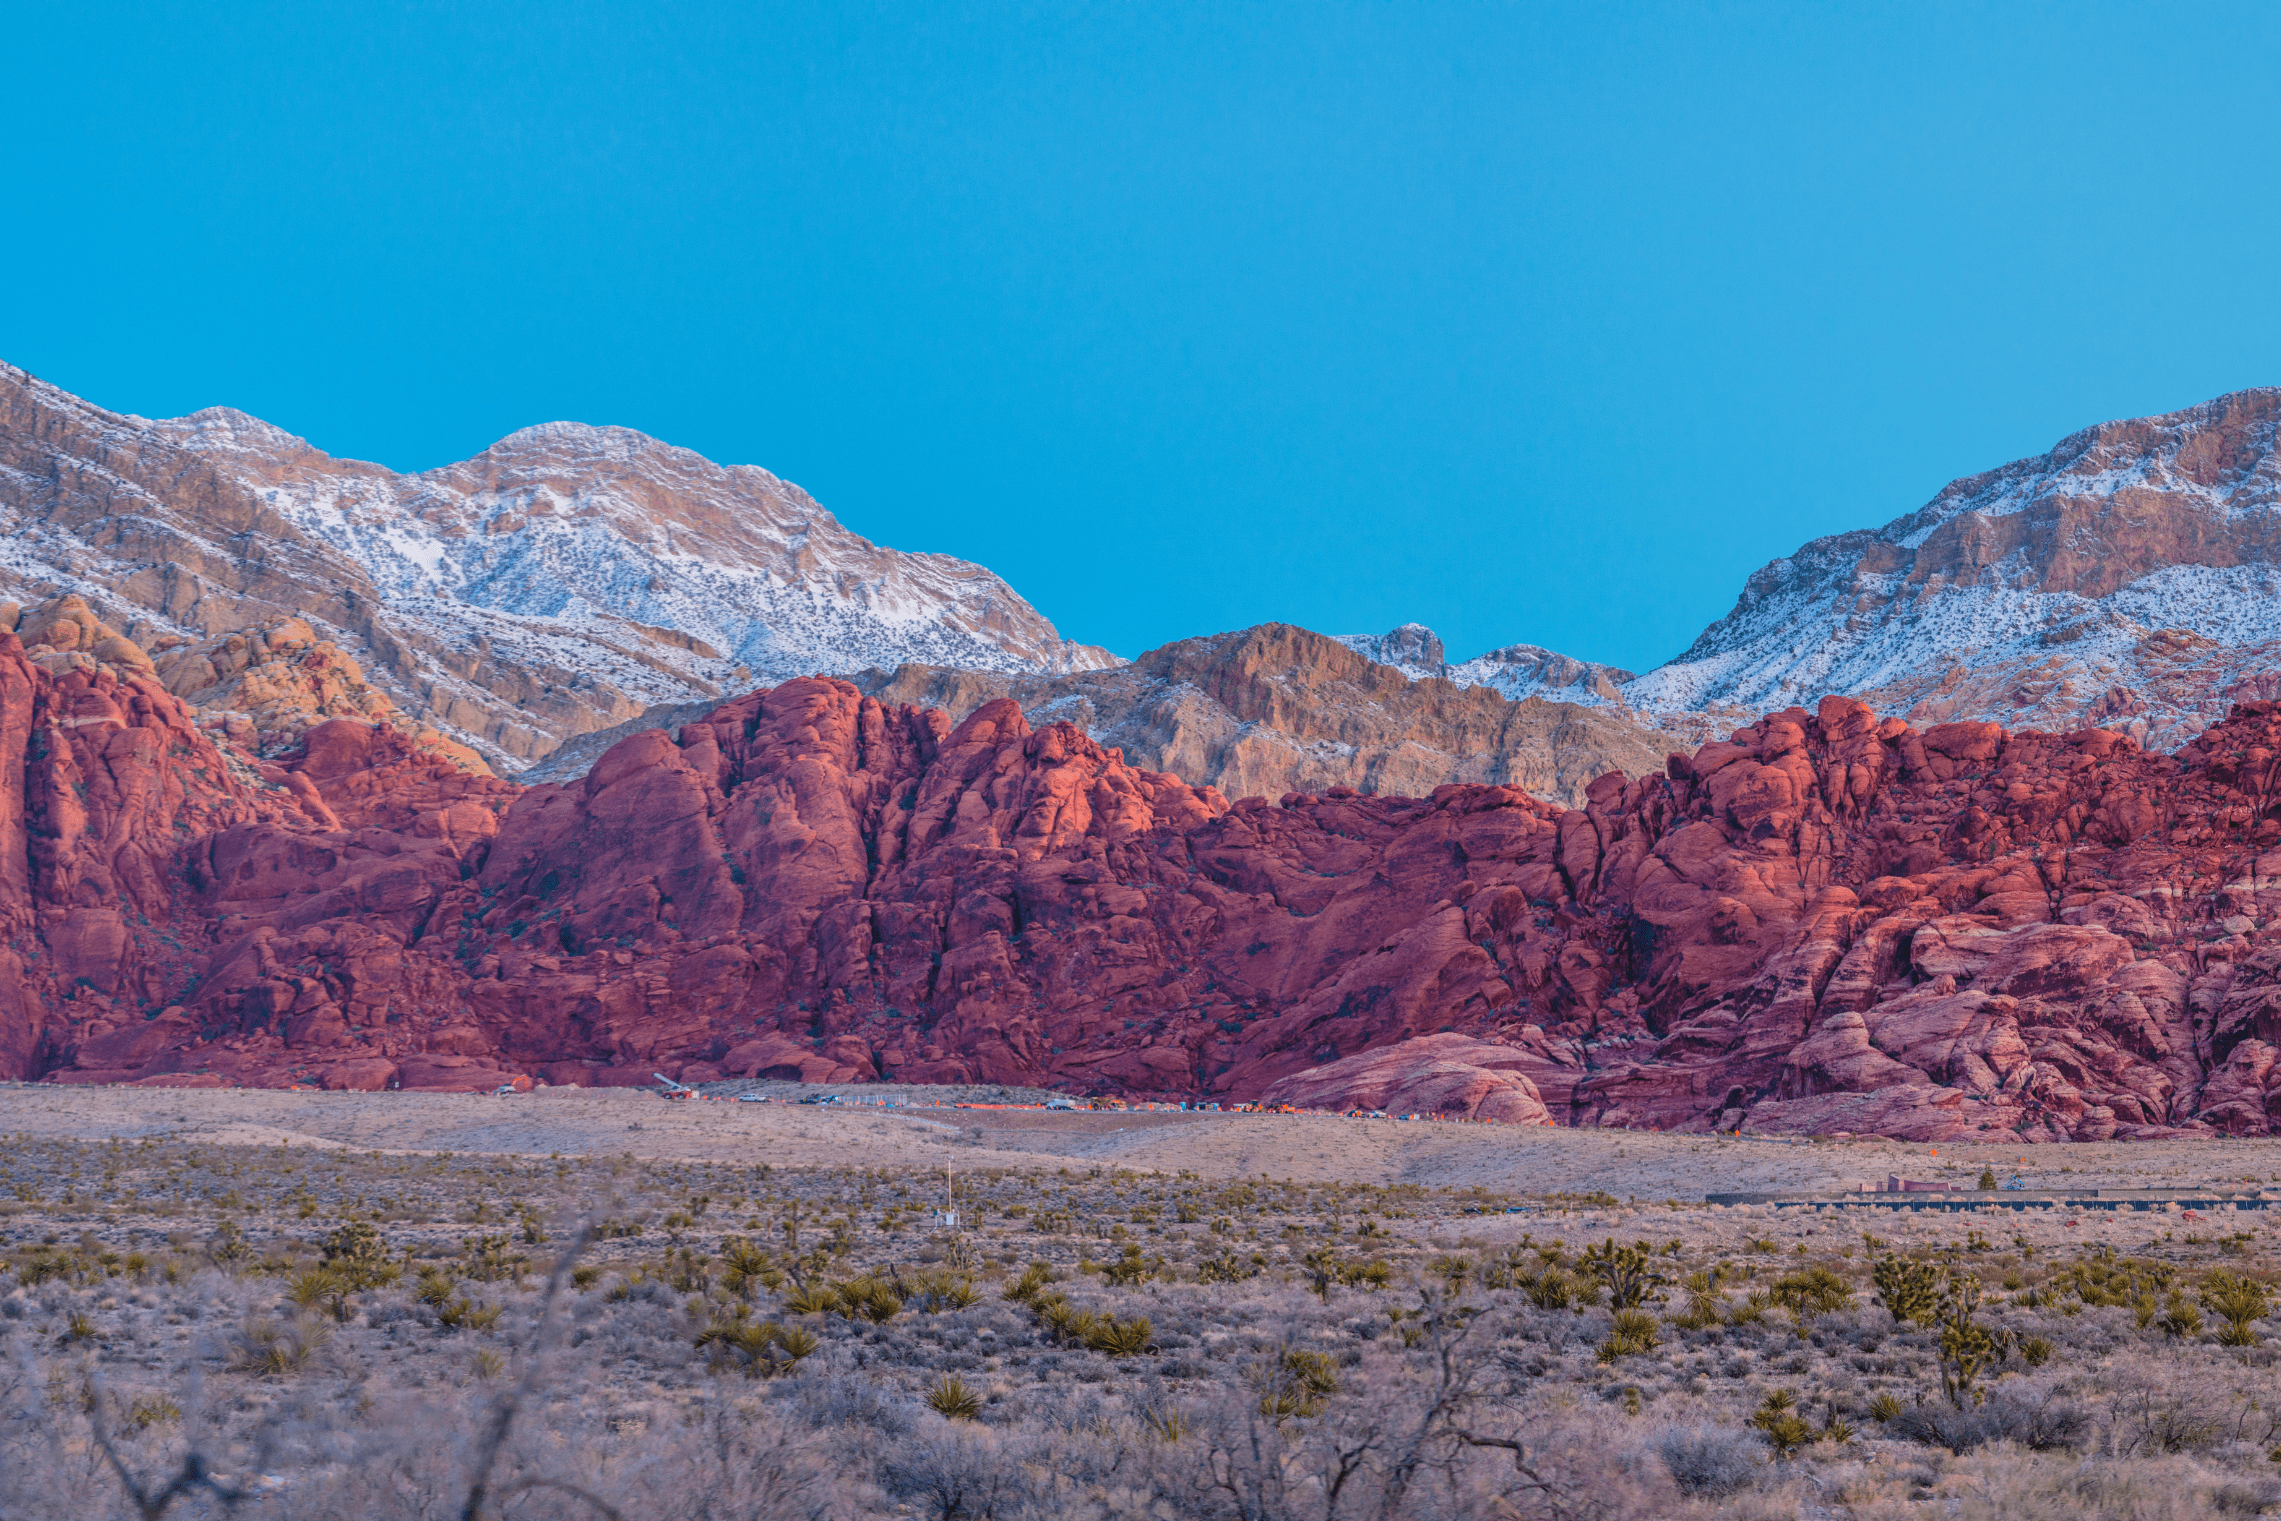 An image of the las vegas desert